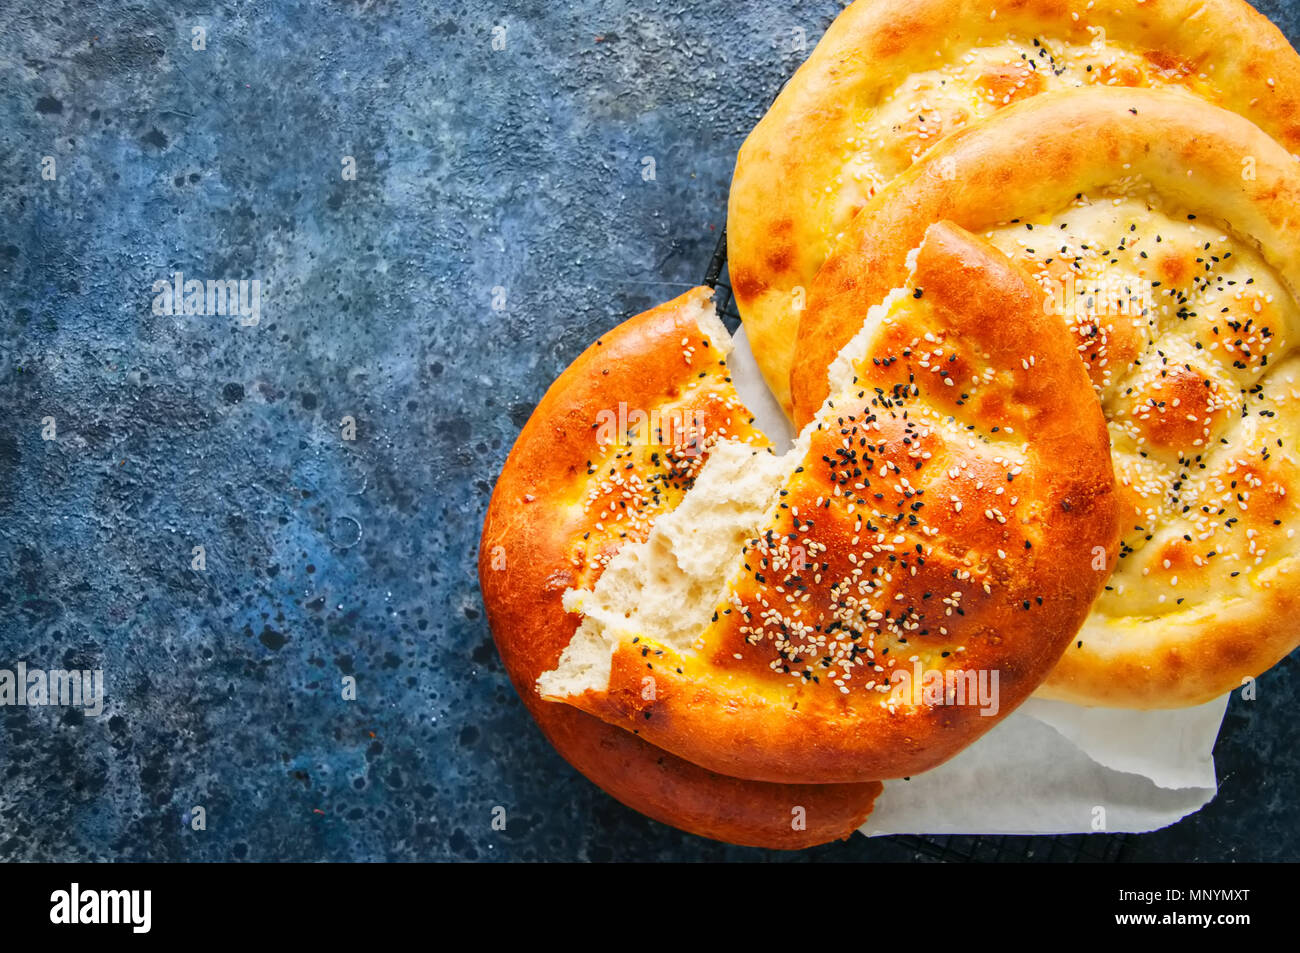 Turkish ramazan pidesi - Traditional Turkish ramadan flatbreads usually baked during ramadan month. Blue stone background. Top view. Stock Photo